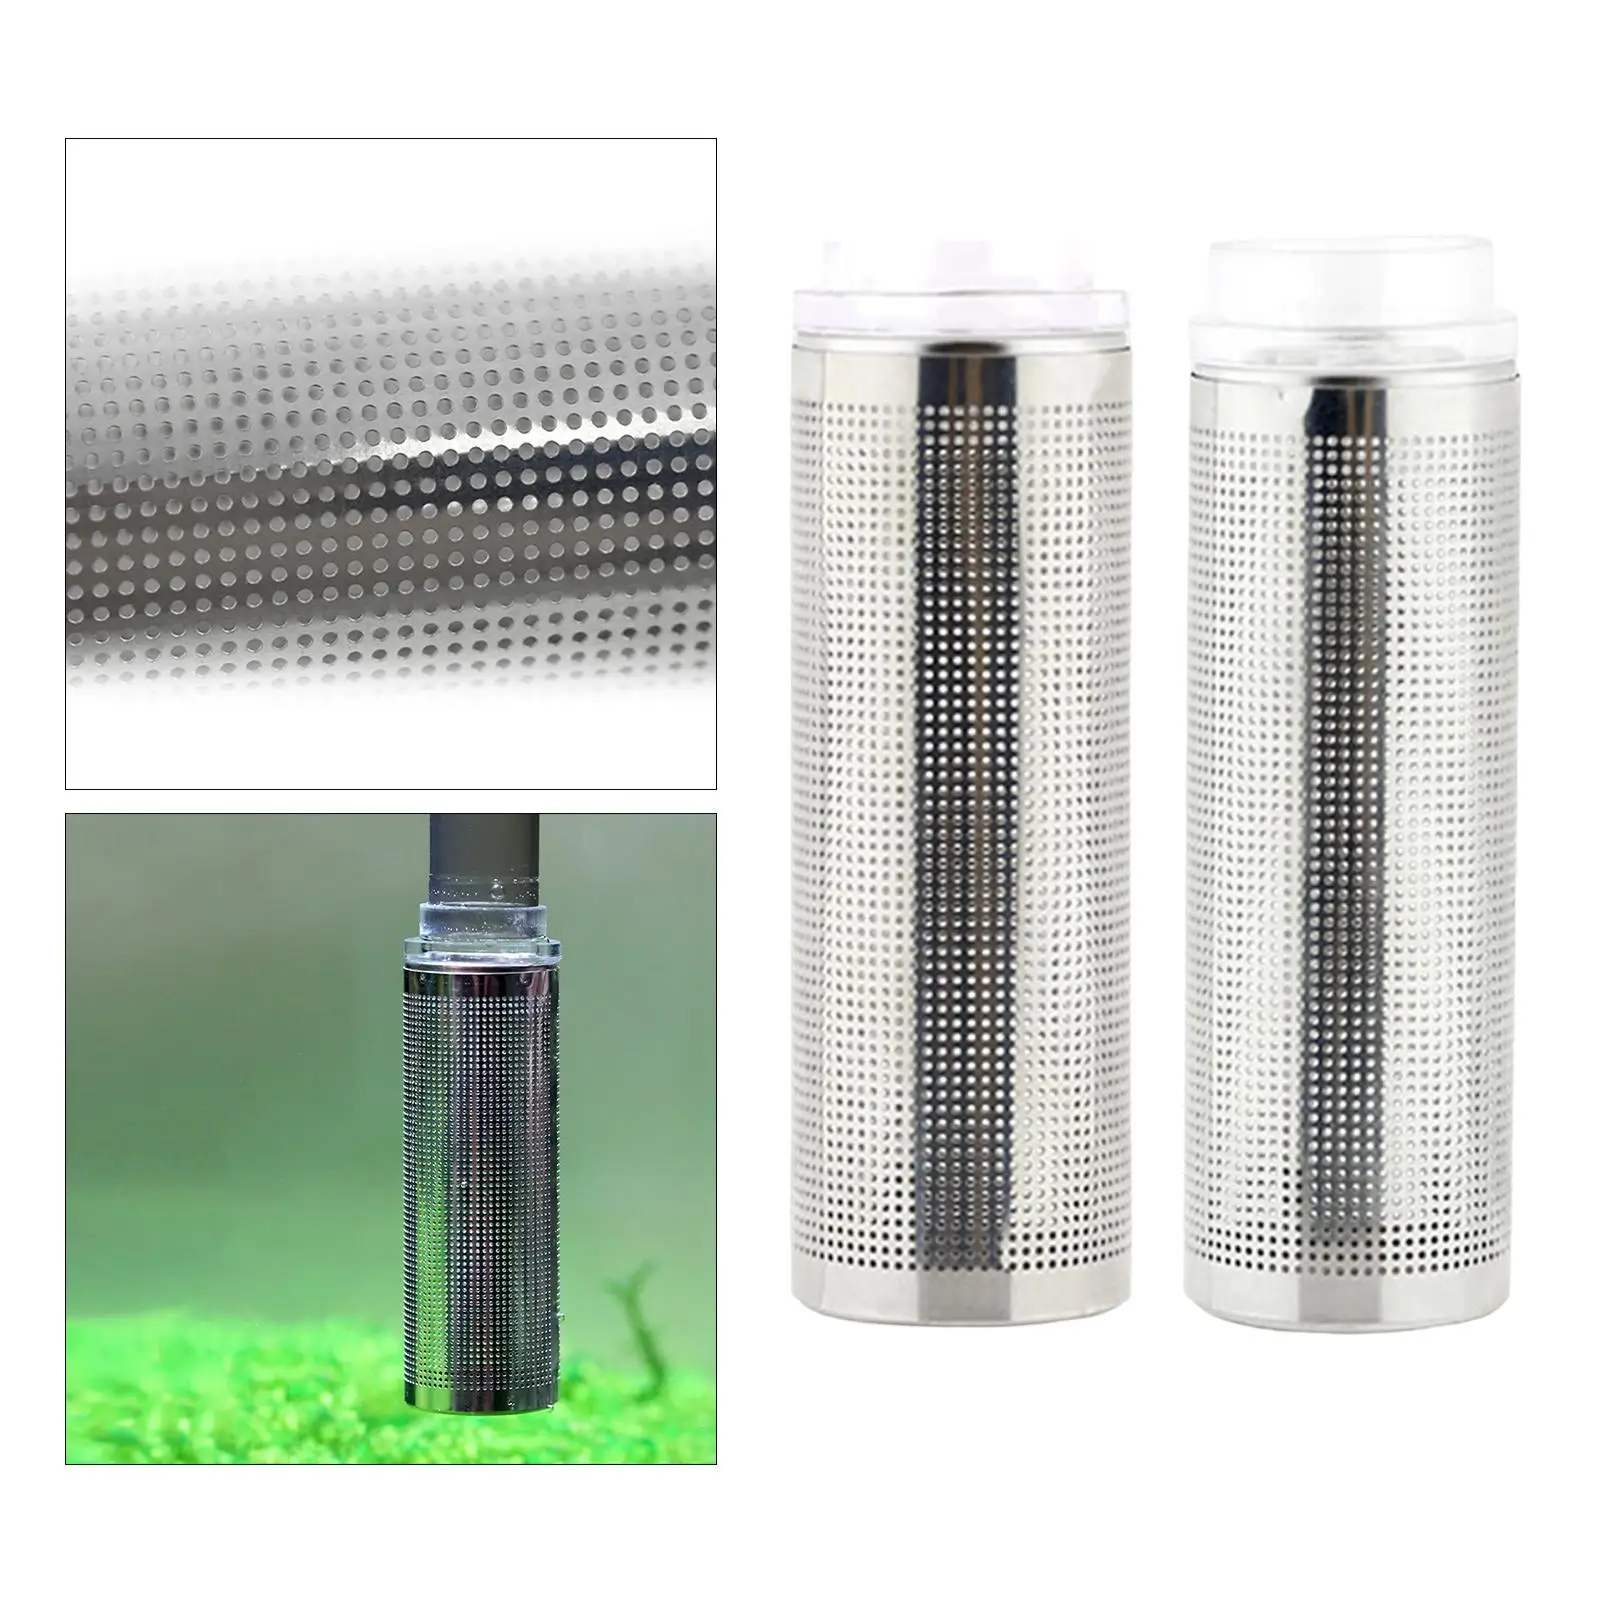 Aquarium Filter Mesh, Inflow Inlet Filter Mesh Cover, Intake Strainer Filtration Net